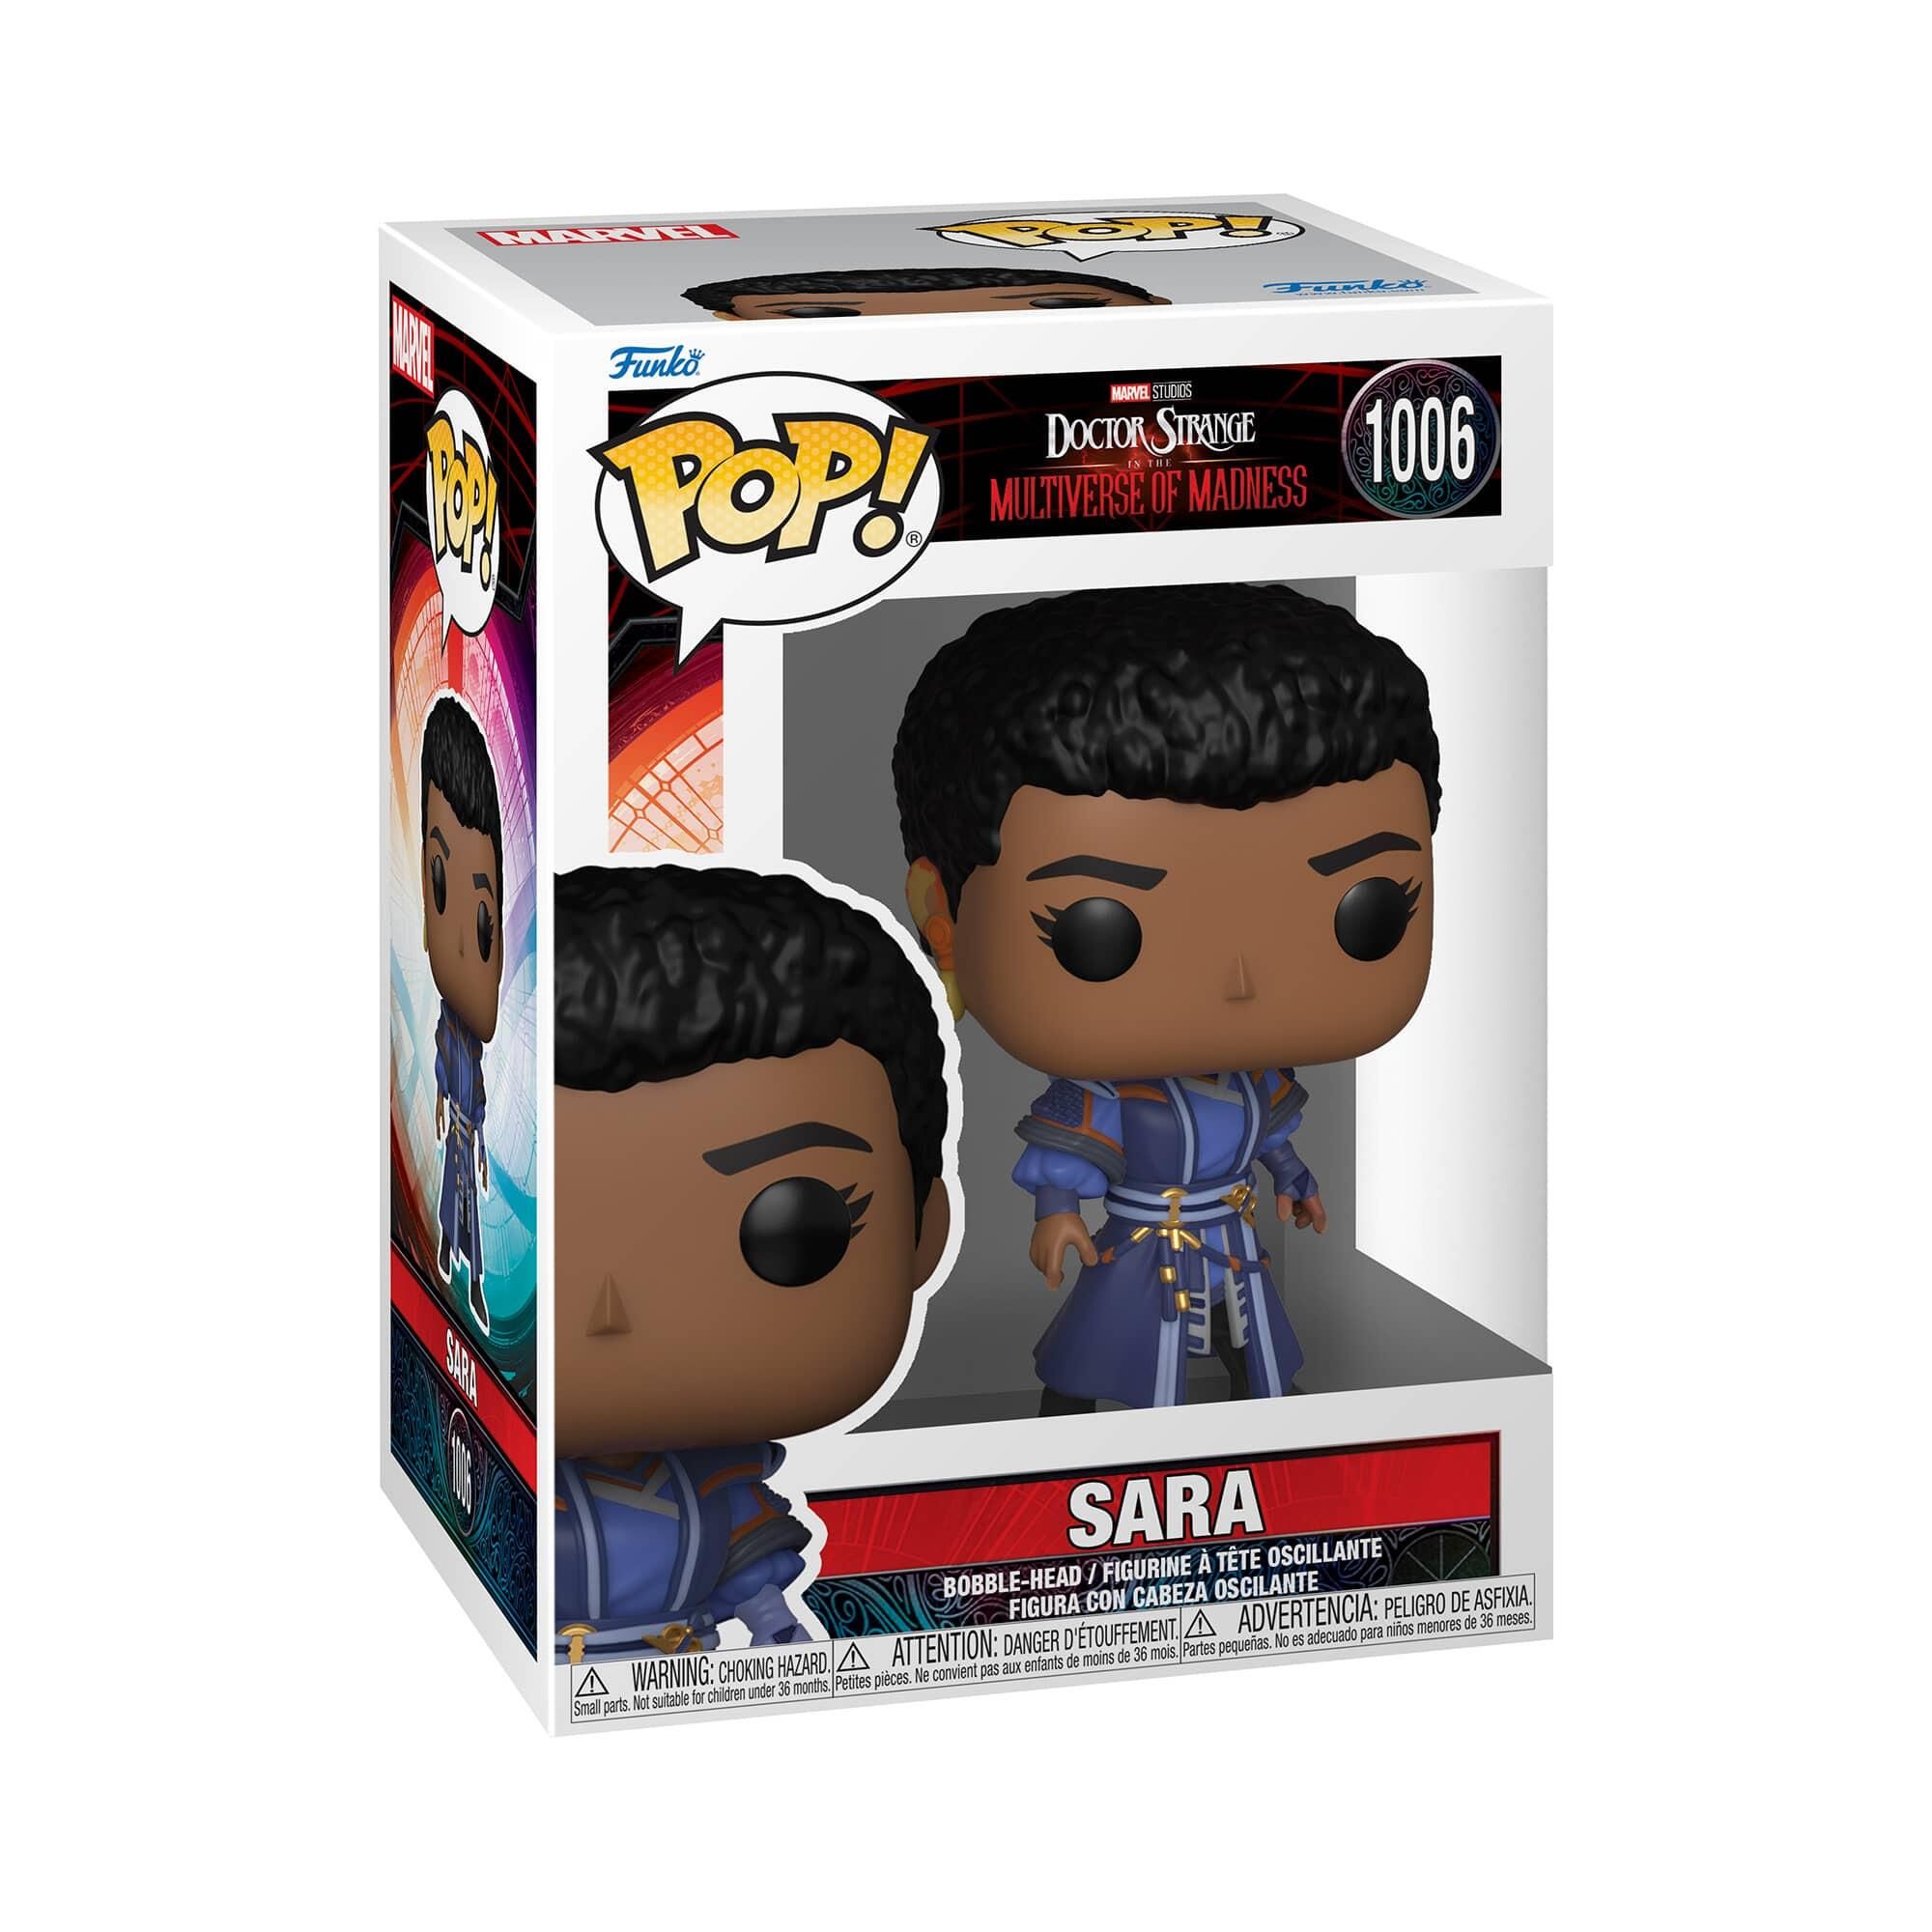 Sara Doctor Strange Pop Funko